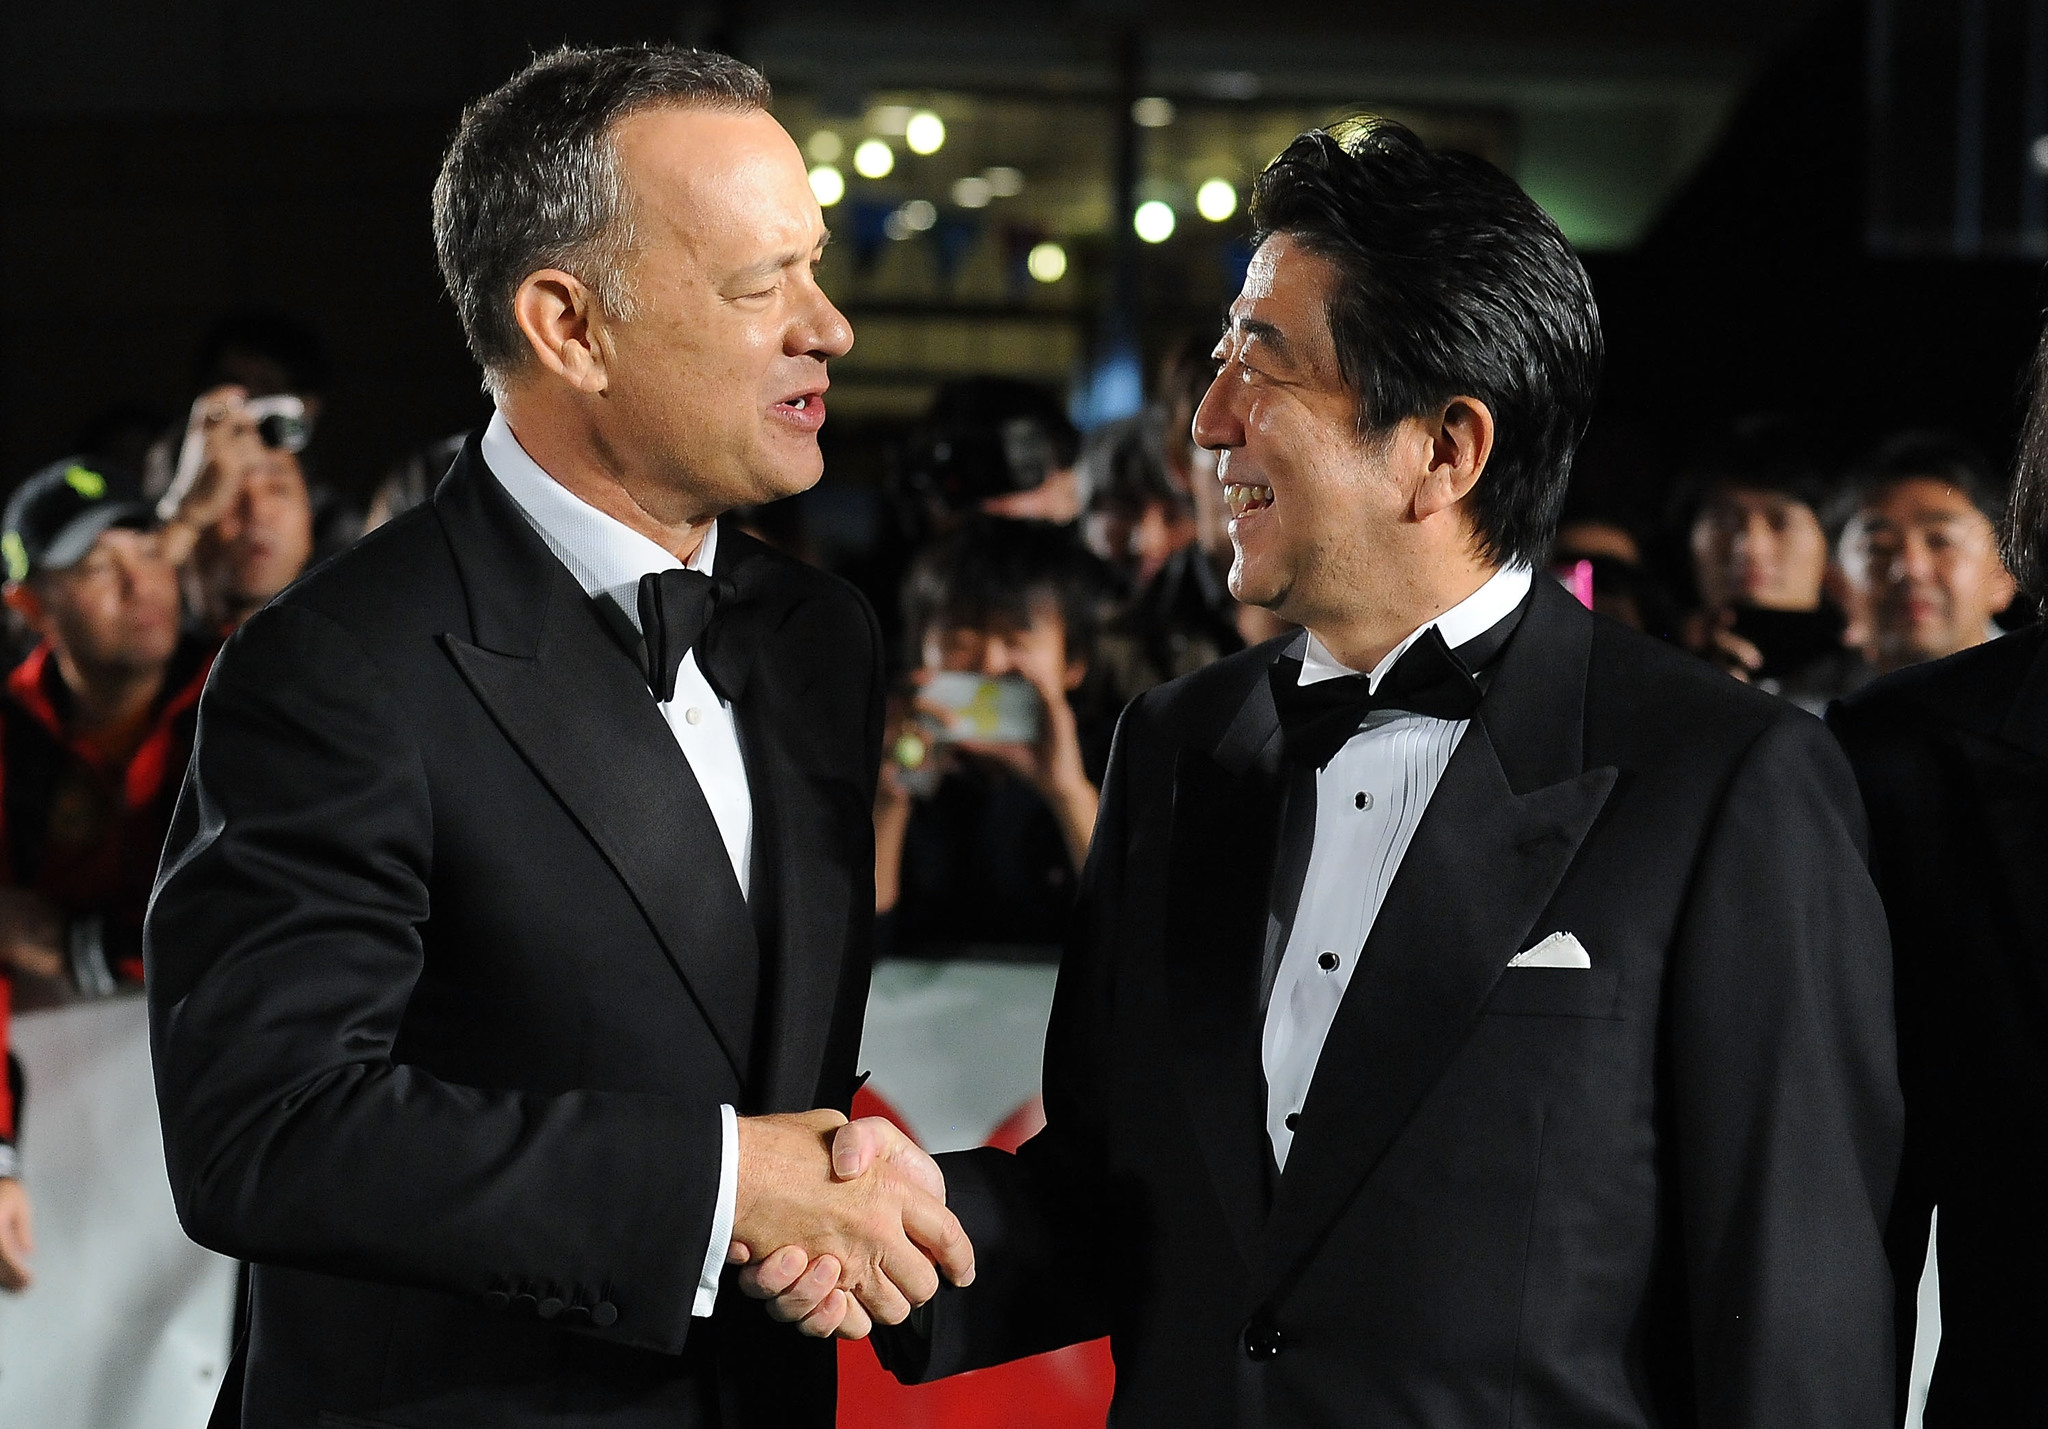 Tom Hanks and Shinzo Abe